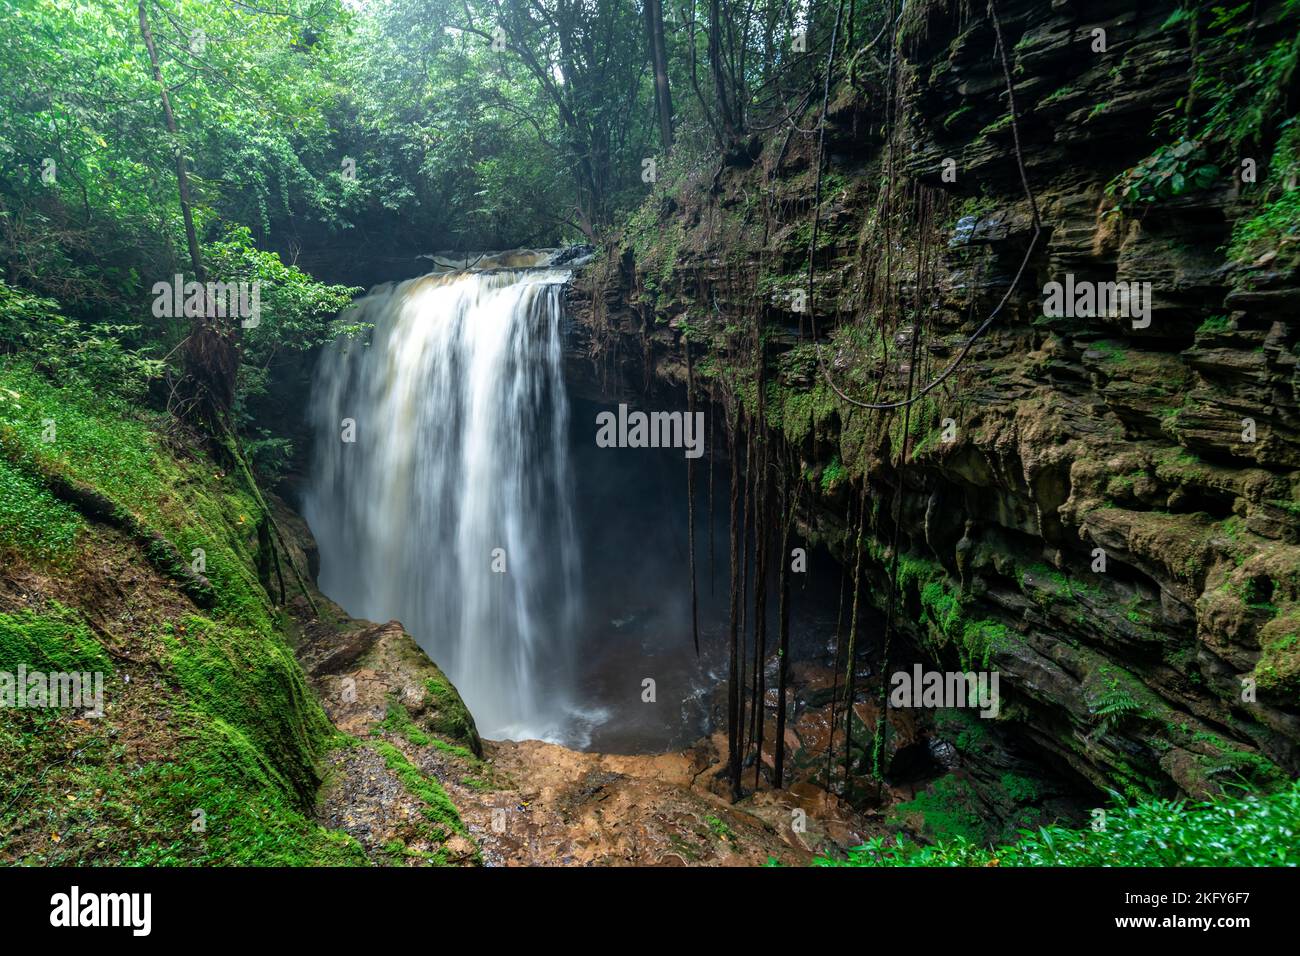 Waterfall in Brazil in nature Stock Photo